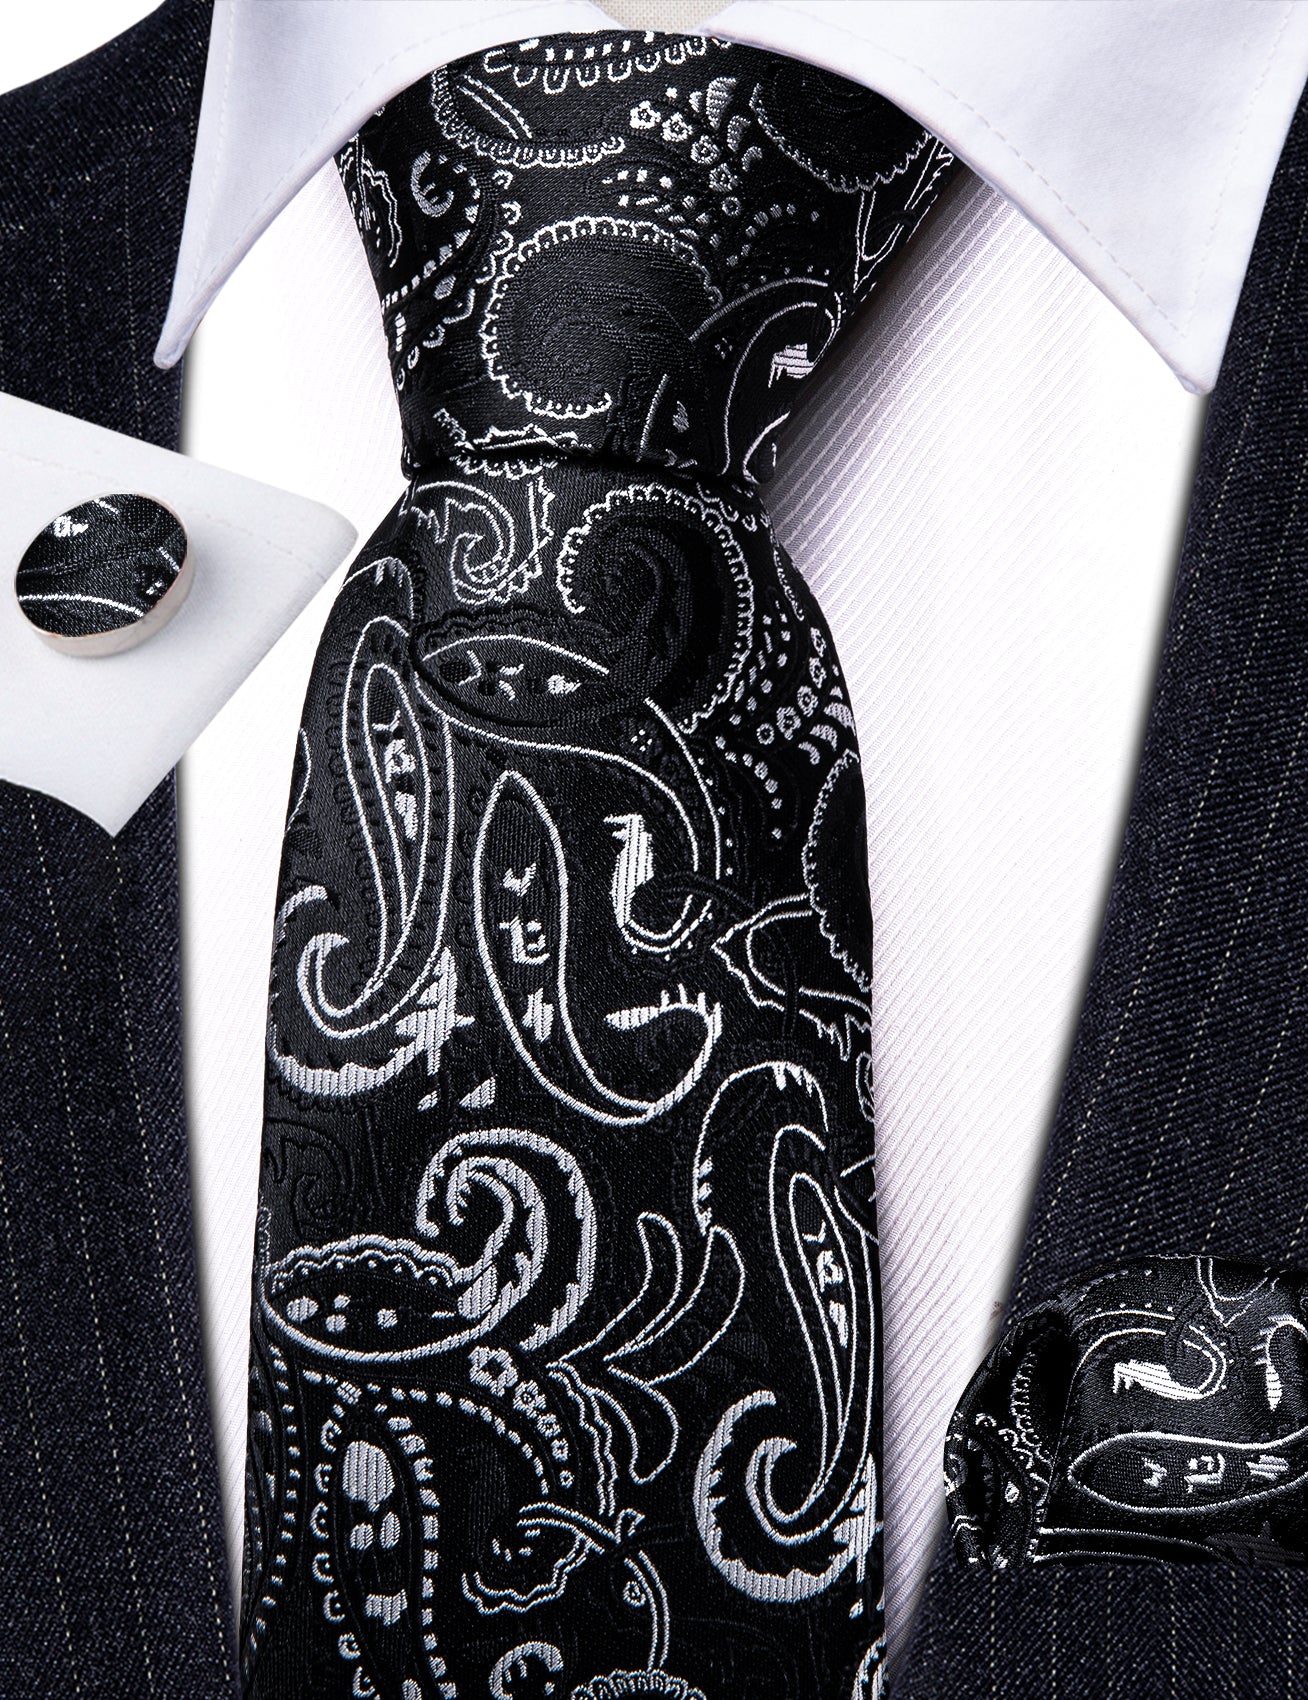 Luxury Black White Paisley Tie Handkerchief Cufflinks Set